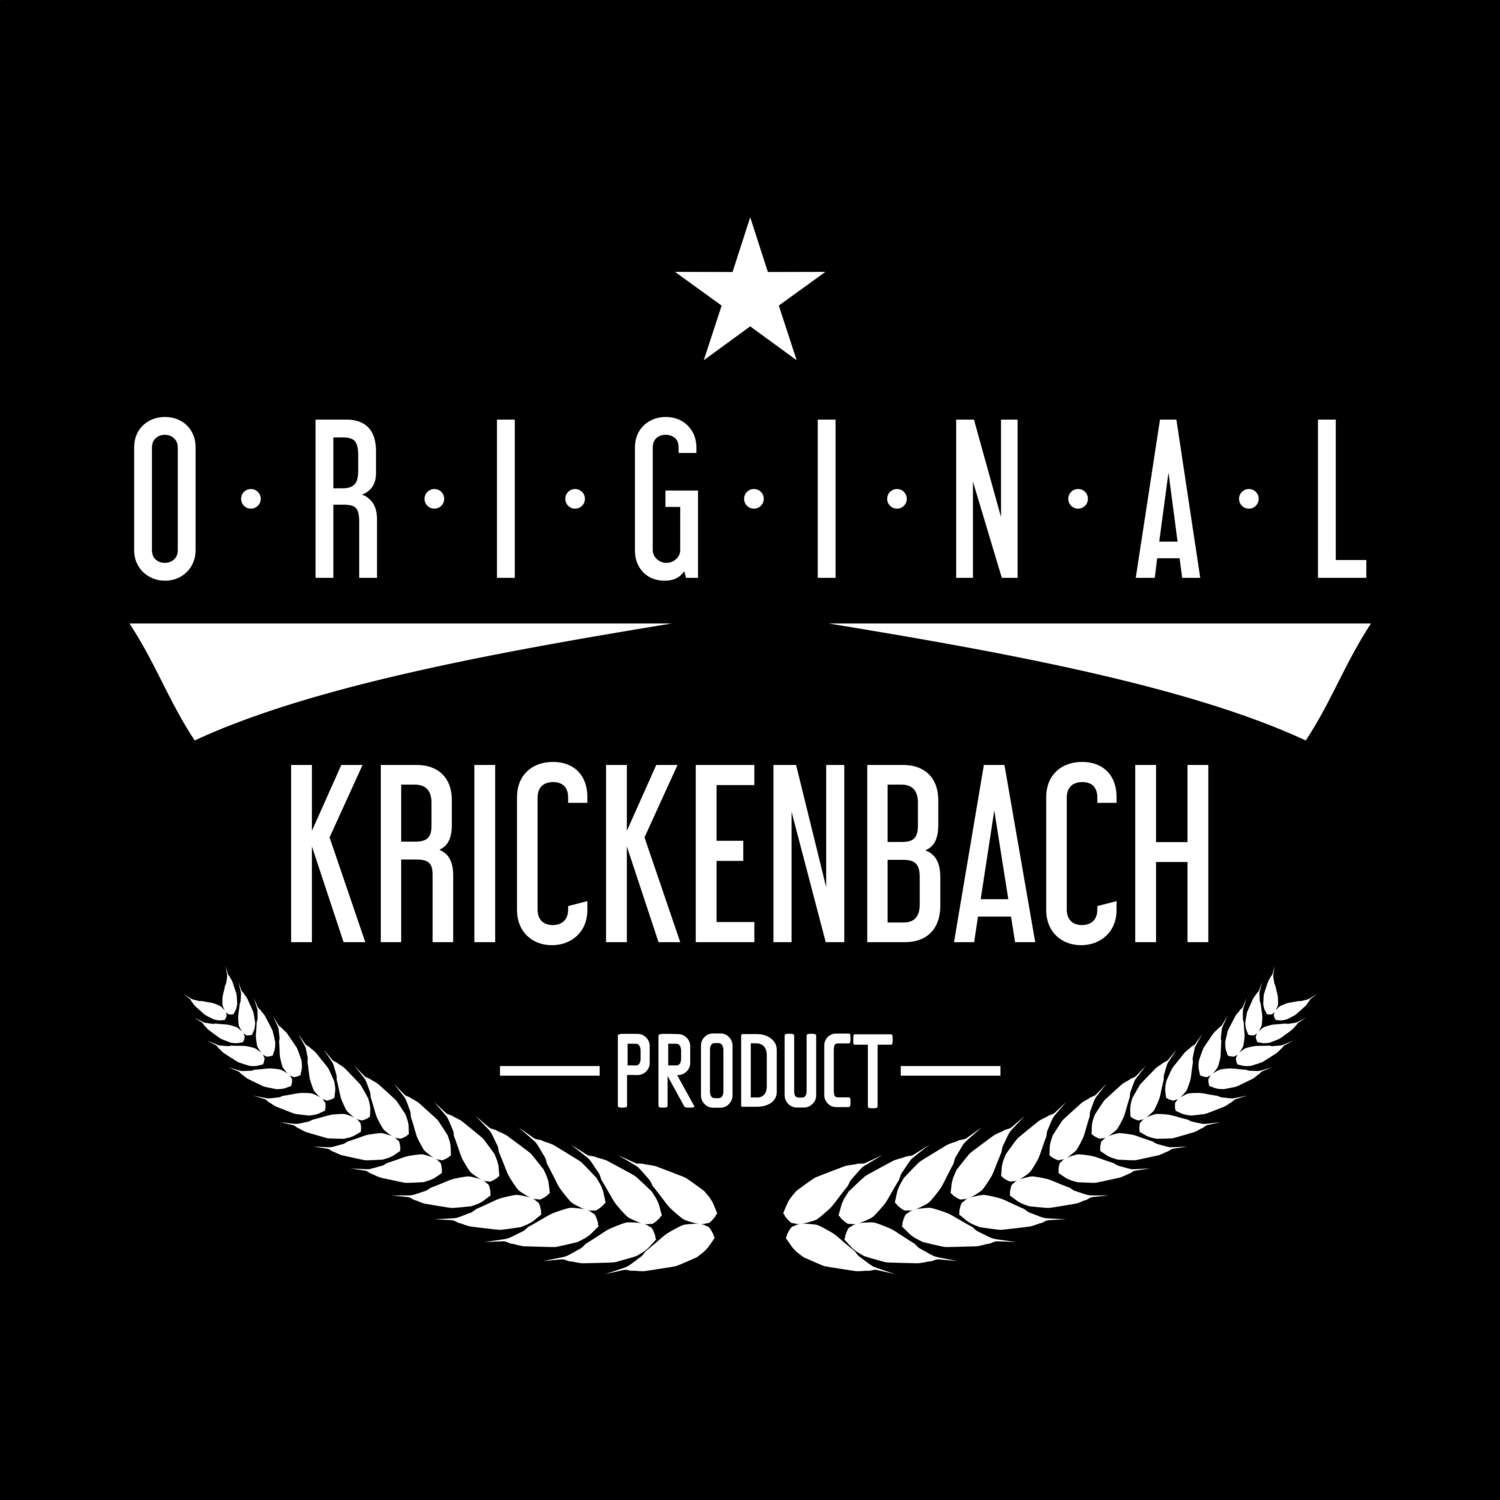 Krickenbach T-Shirt »Original Product«